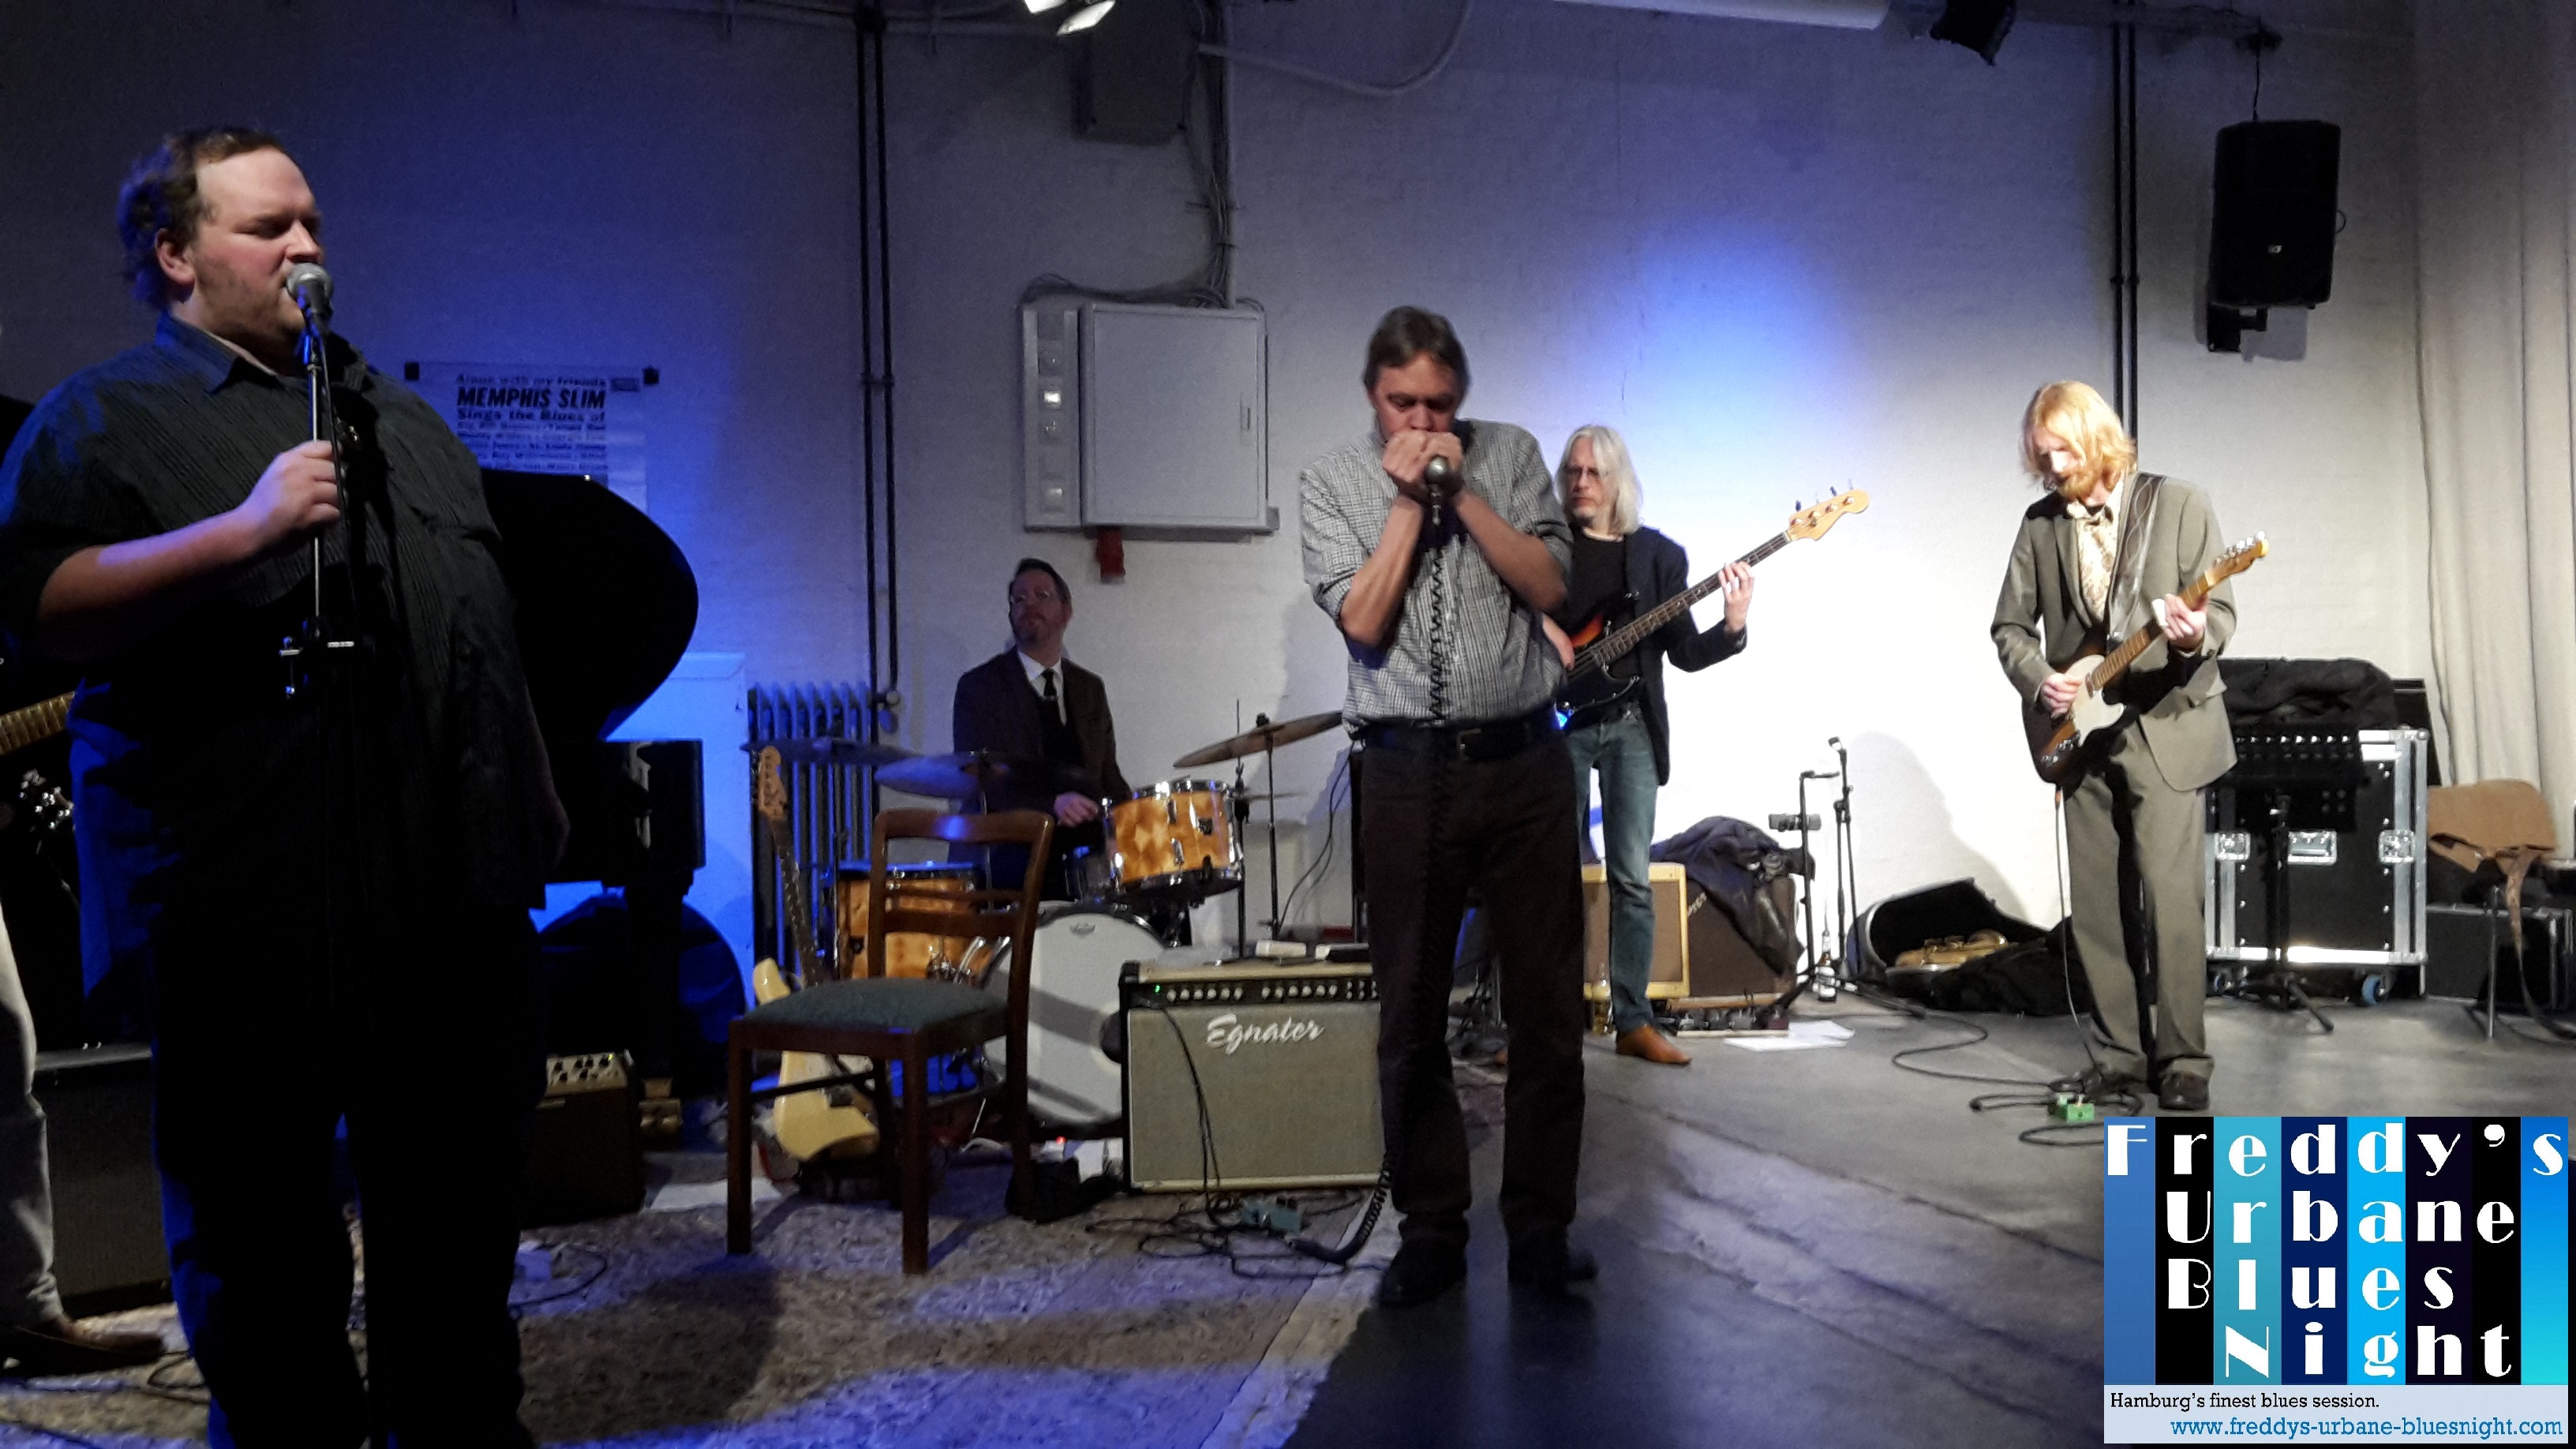 3. "Freddy's Urbane Blues Night" am 04.01.2019 in der "Kulturwerkstatt Hamburg". Von links nach rechts: Reinhard (piano; verdeckt), Guido Molzberger (vocals), Sebastian Hofacker (drums), Andreas Martens (hca.), Karlo Buerschaper (bass), Robert Wendt (slide guitar). (Foto: H. M. Schmidt)